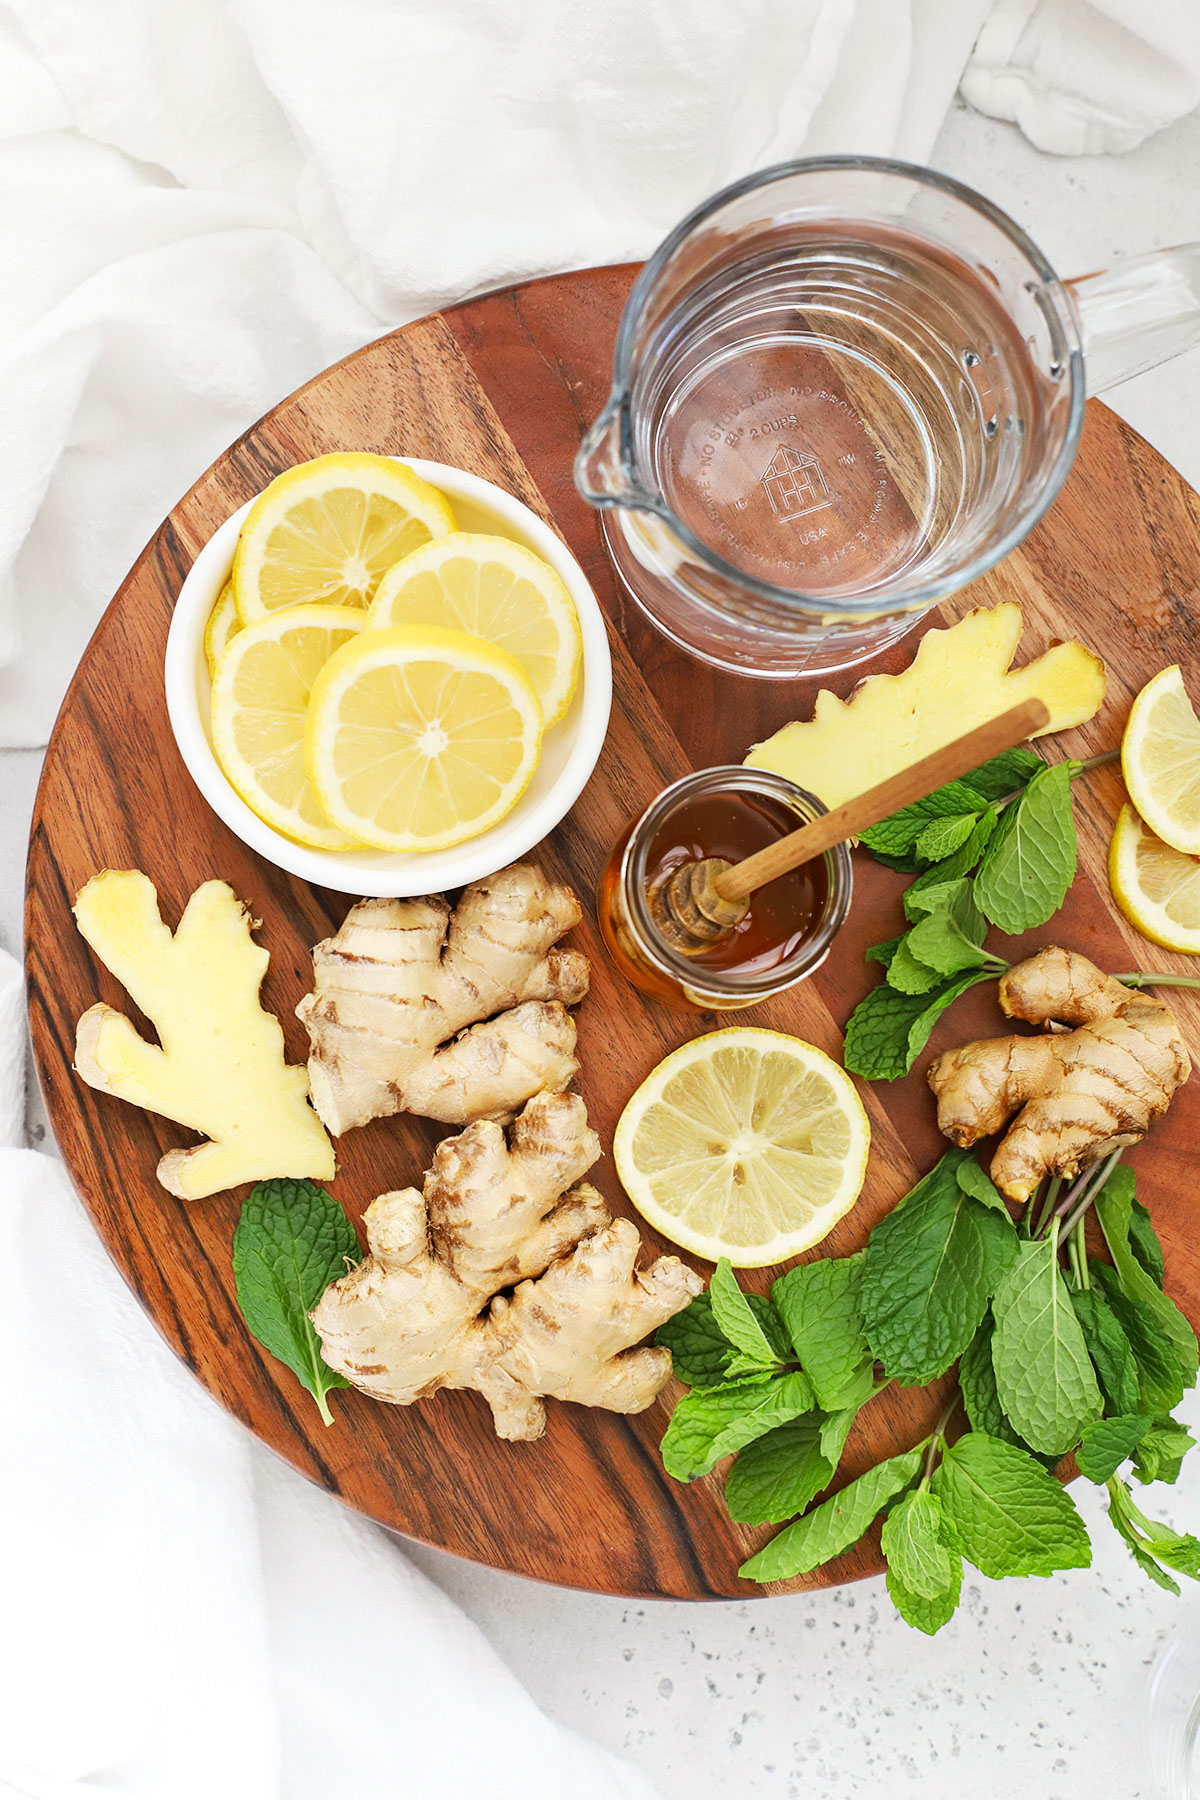 Ingredients for lemon-ginger herbal tea